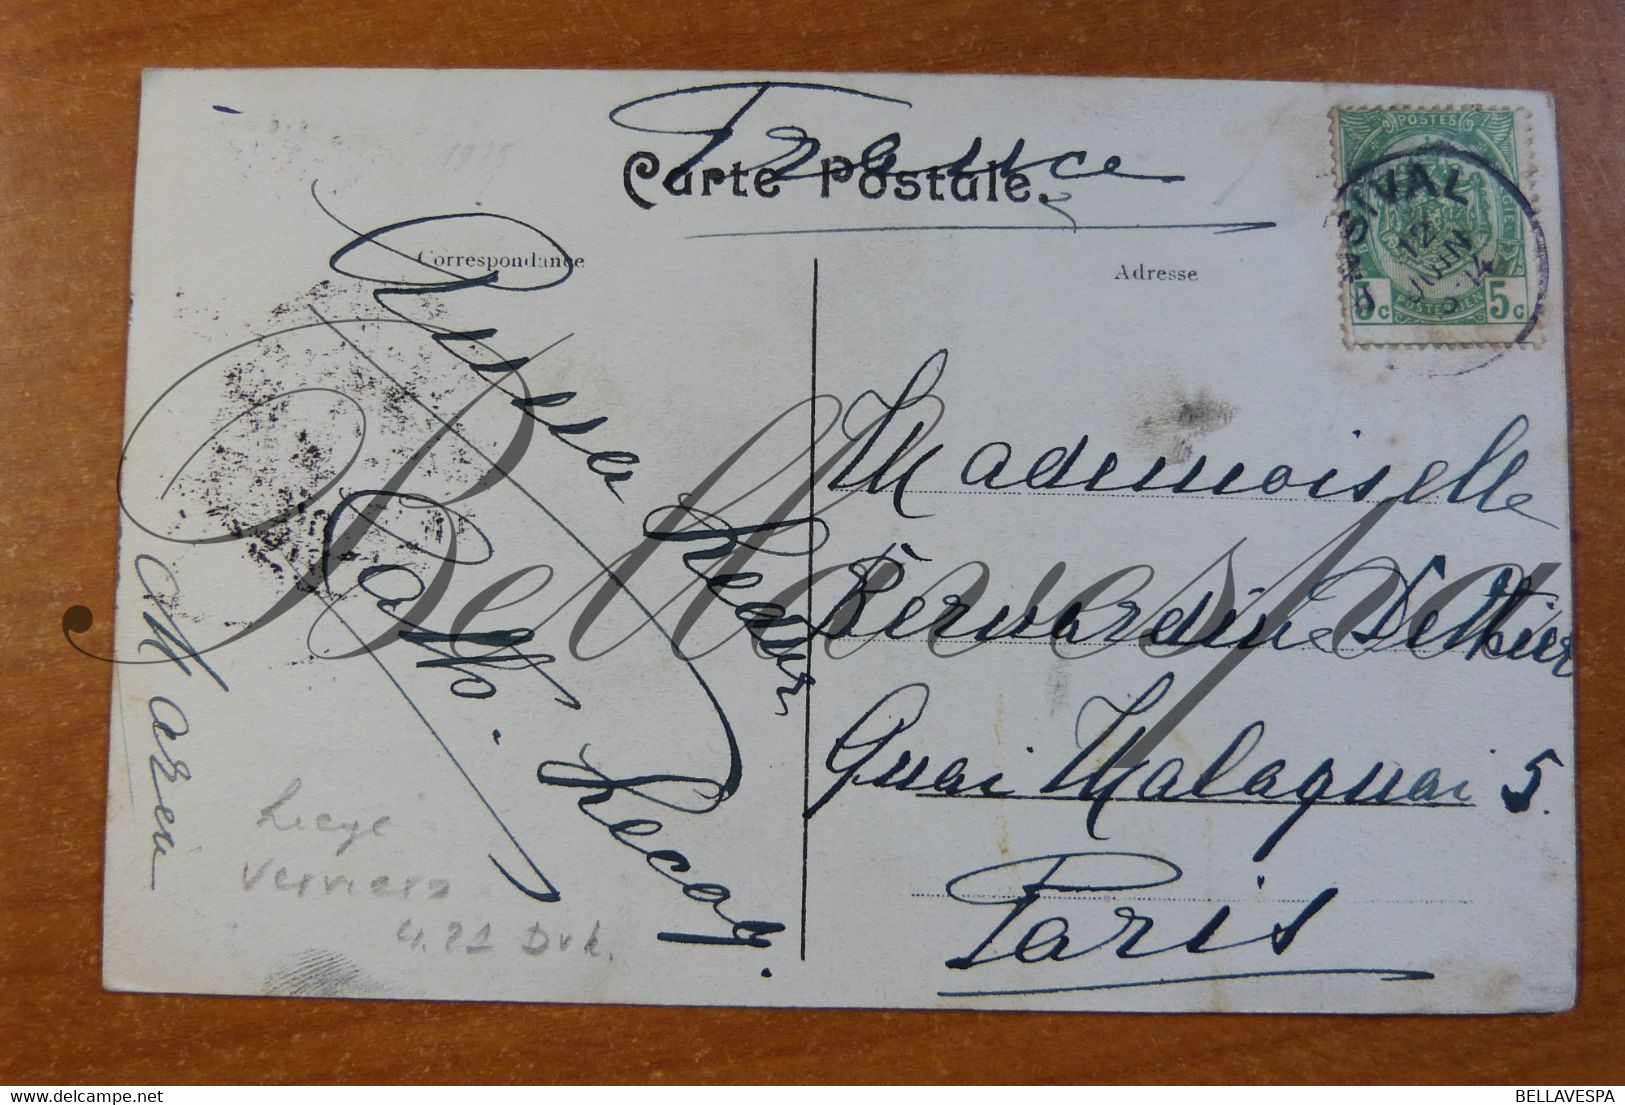 Postkaarten , cpa lot  19 stuks Provincie Liége. Luik